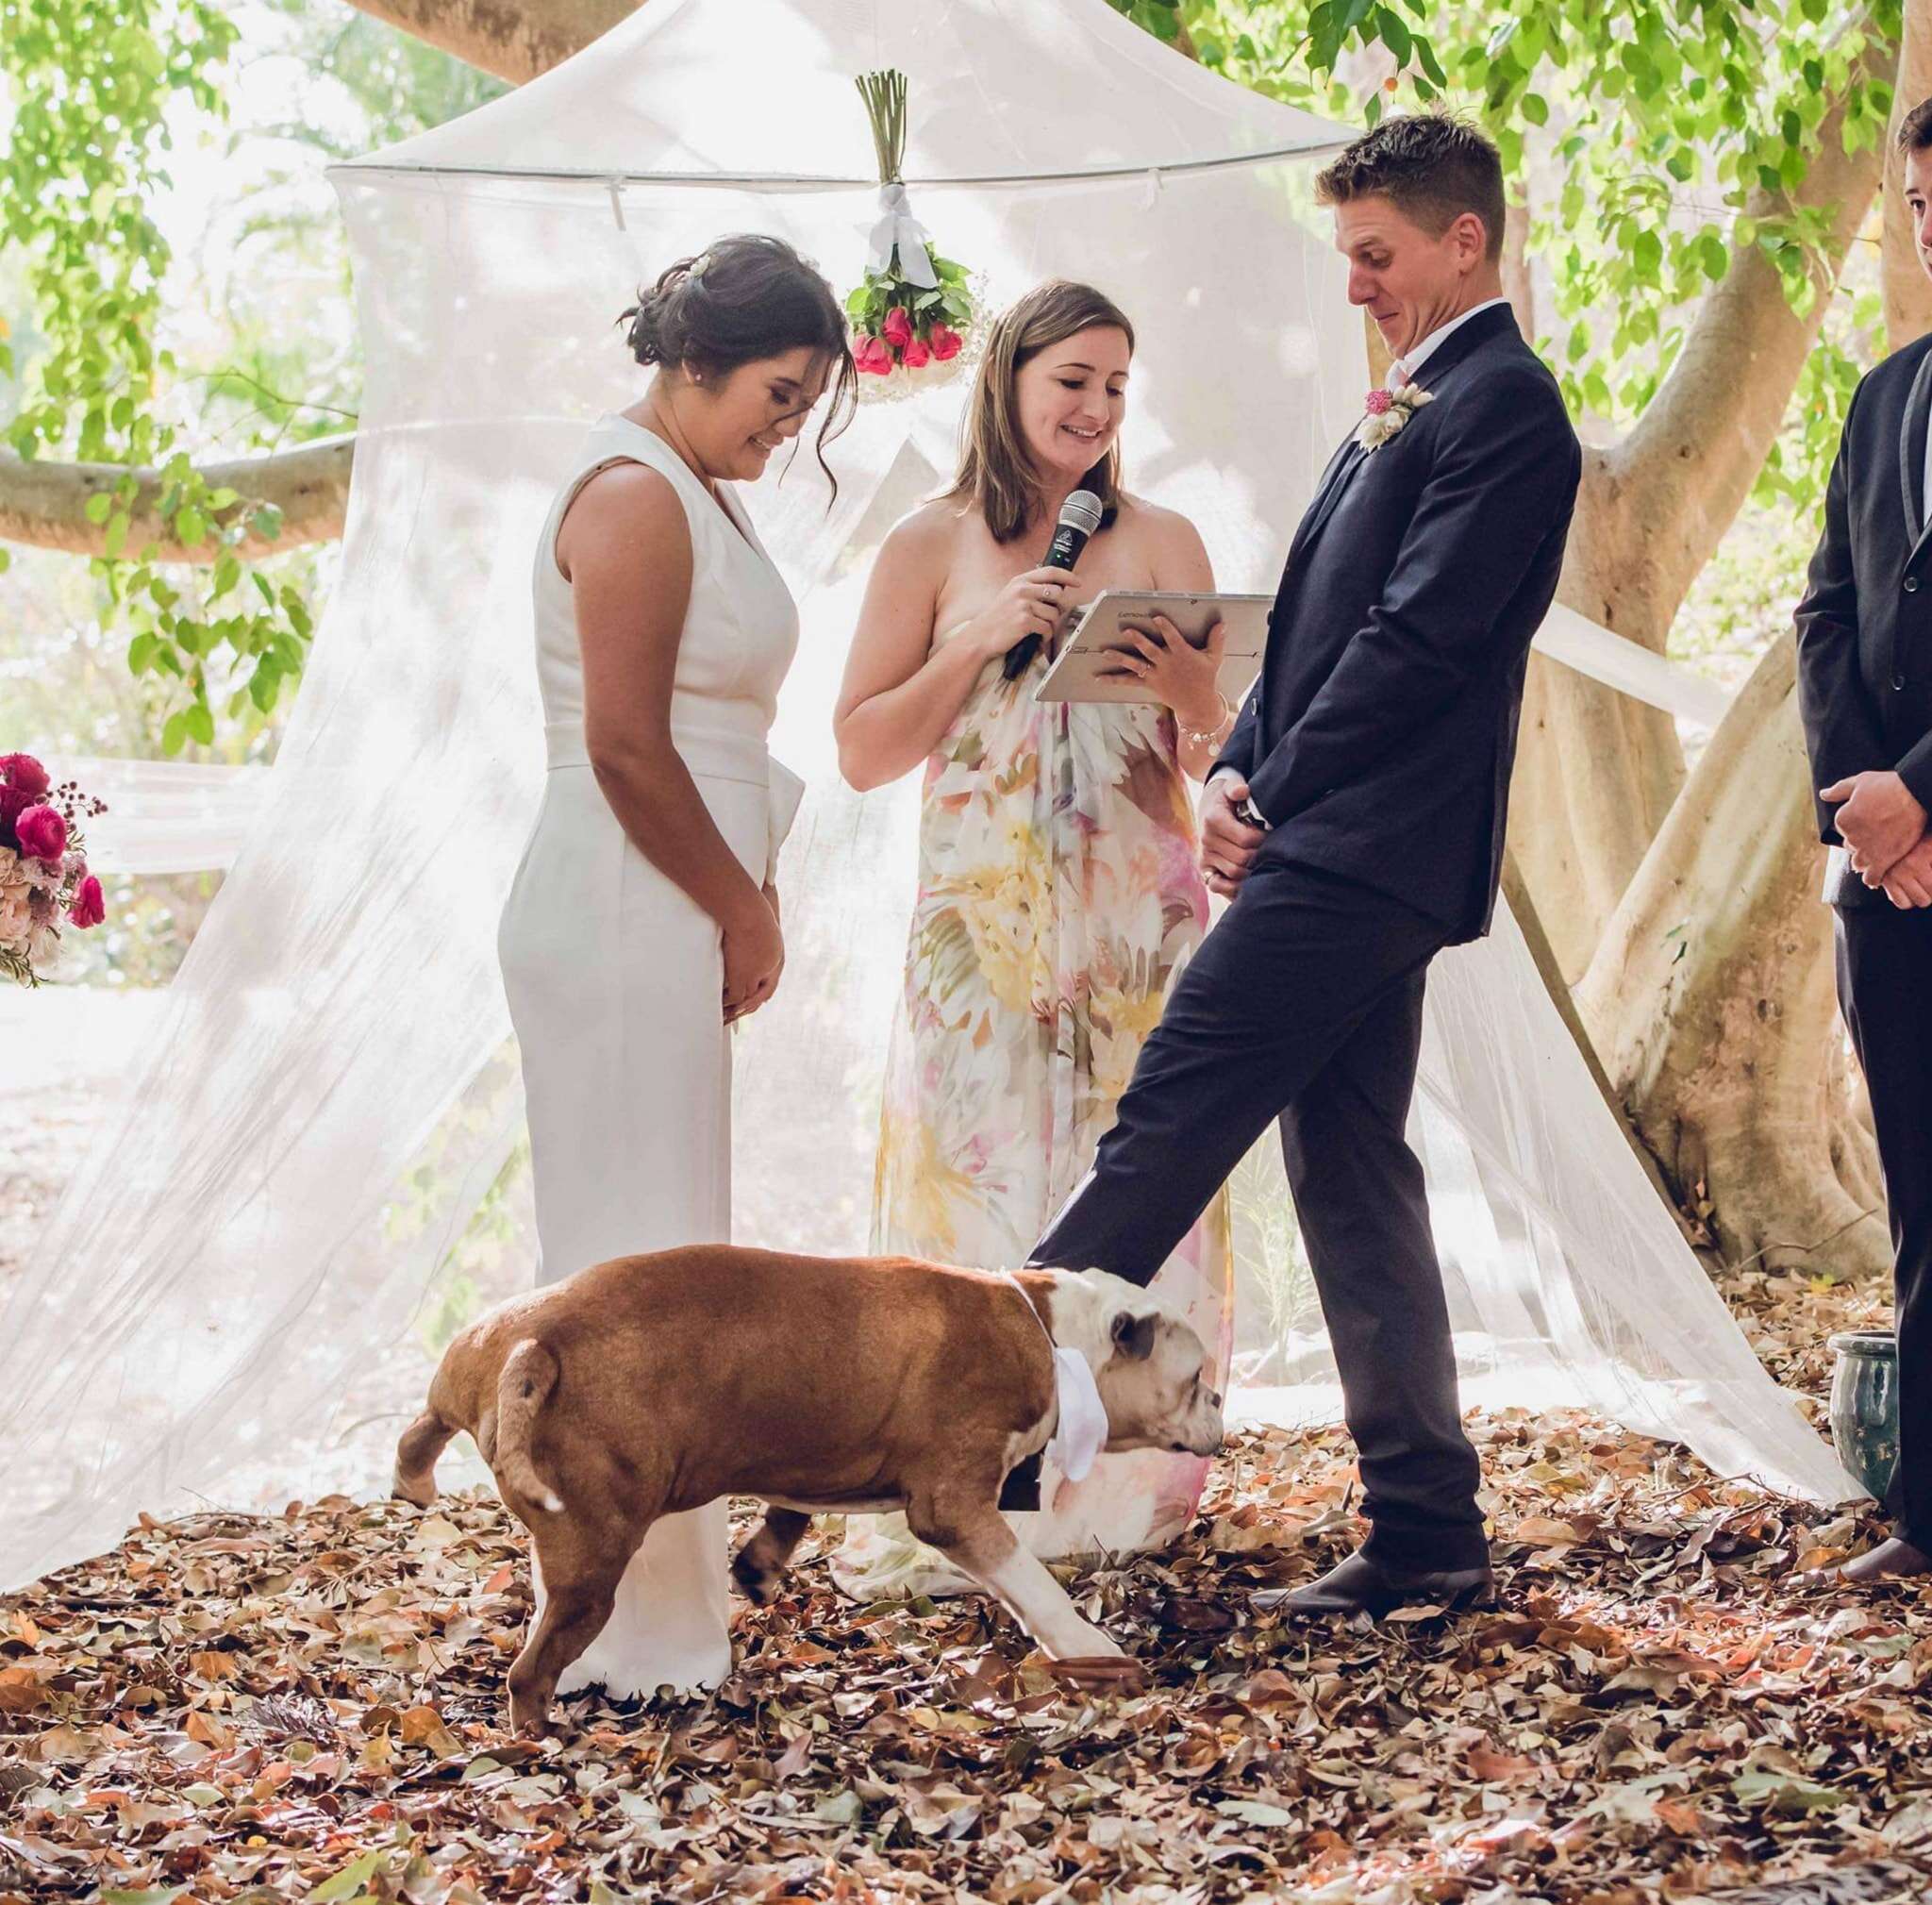 Dog pees on bride during wedding